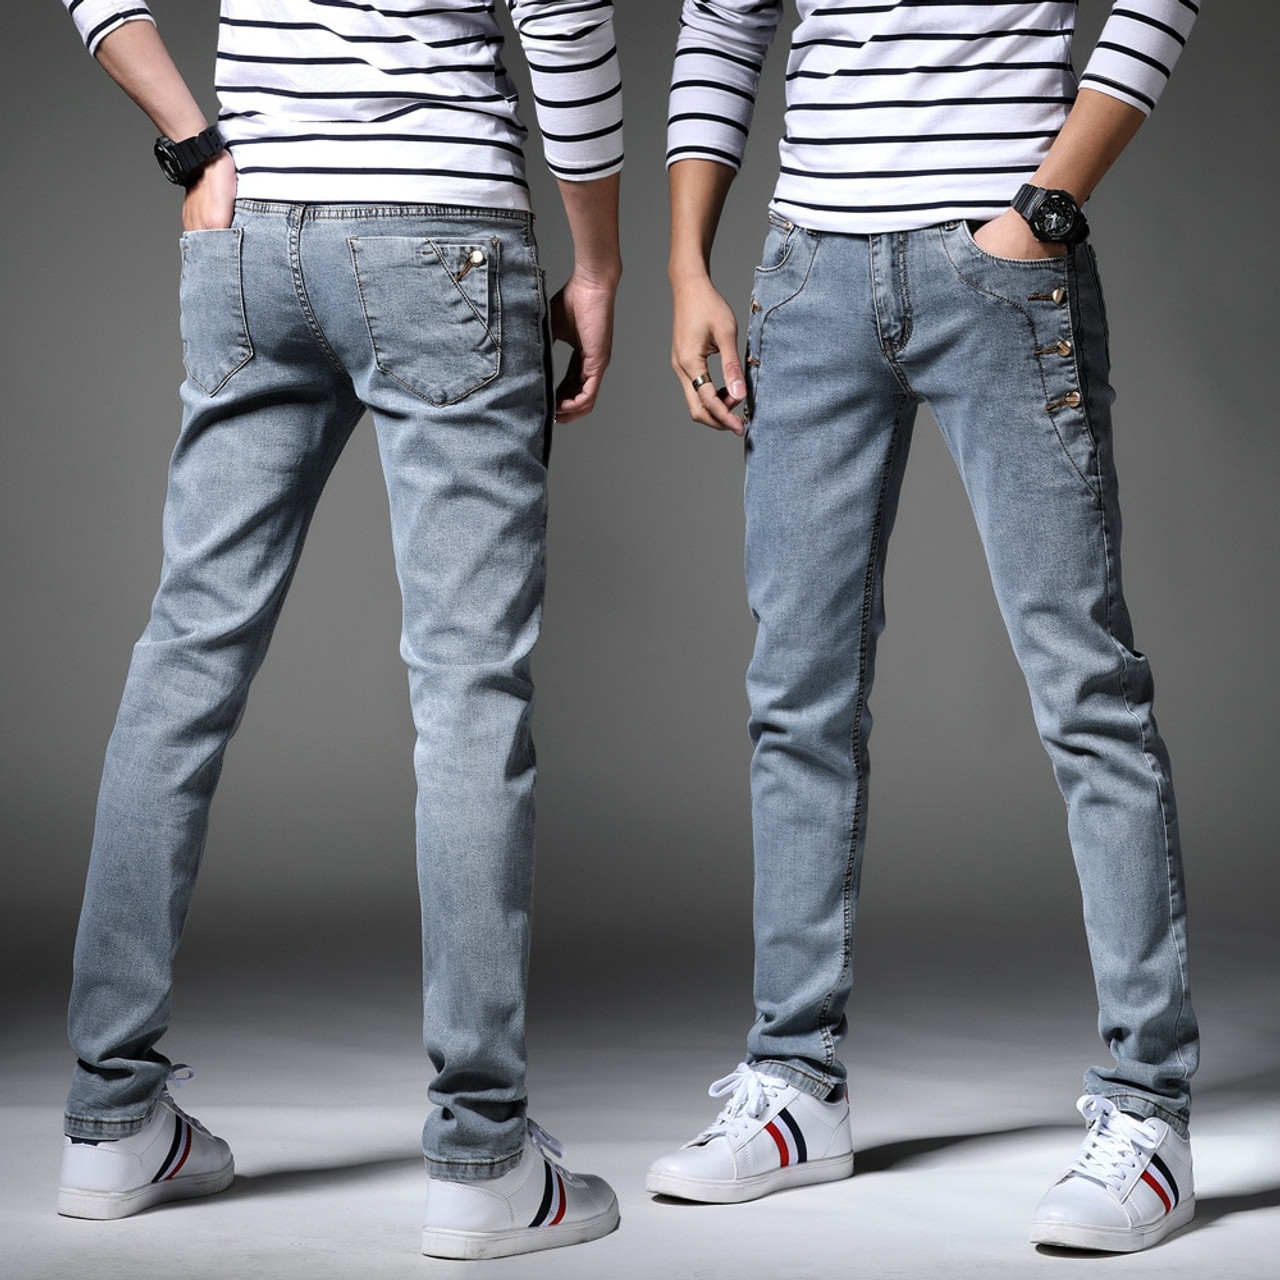 good quality denim jeans